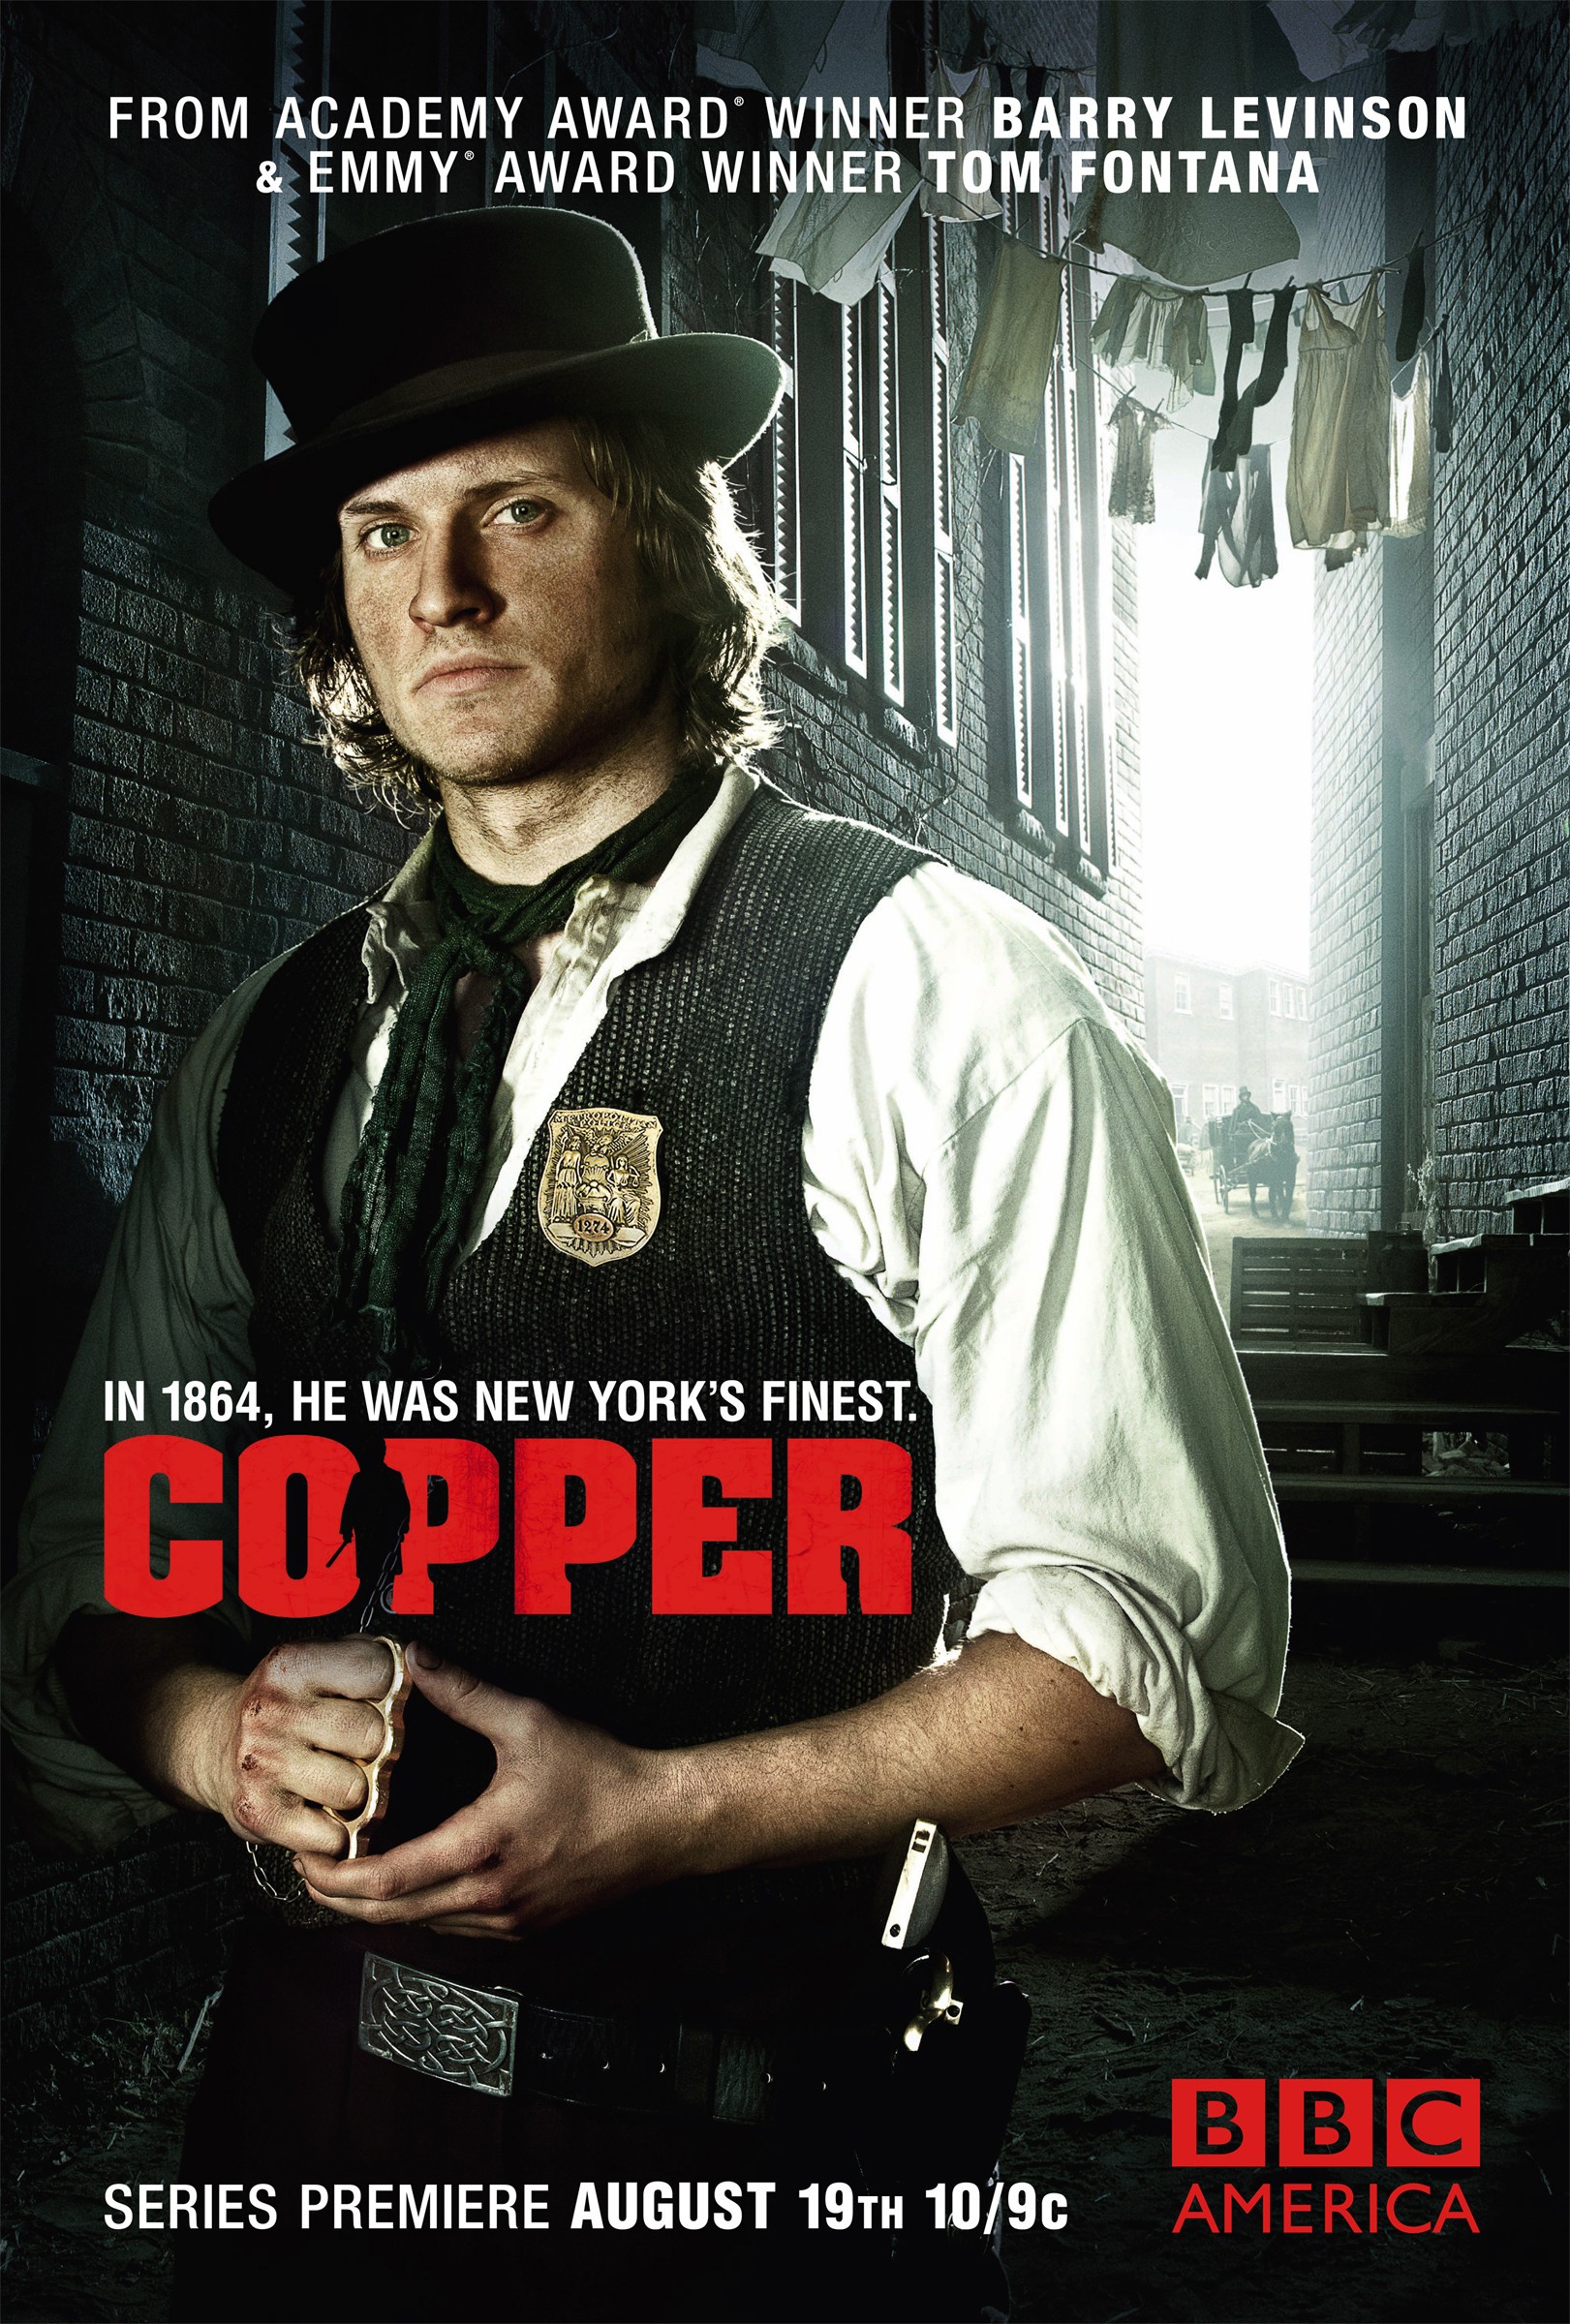 Mega Sized Movie Poster Image for Copper